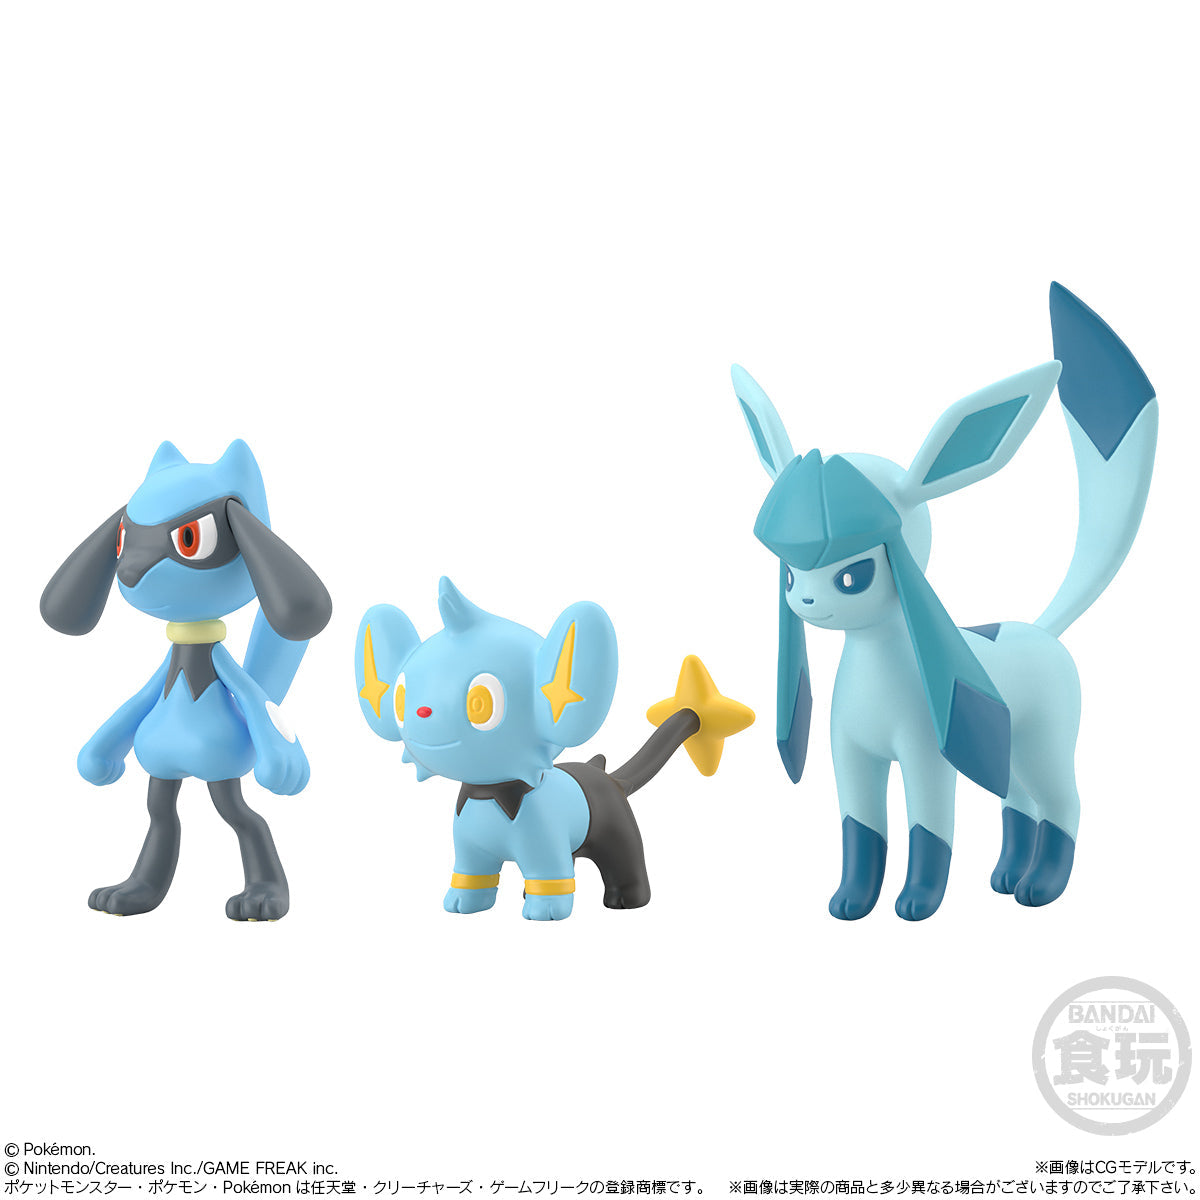 Nintendo Merch Central on X: Kotobukiya has announced a new Pokemon Dawn  with Turtwig ARTFX J statue! Coming in the near future.   / X